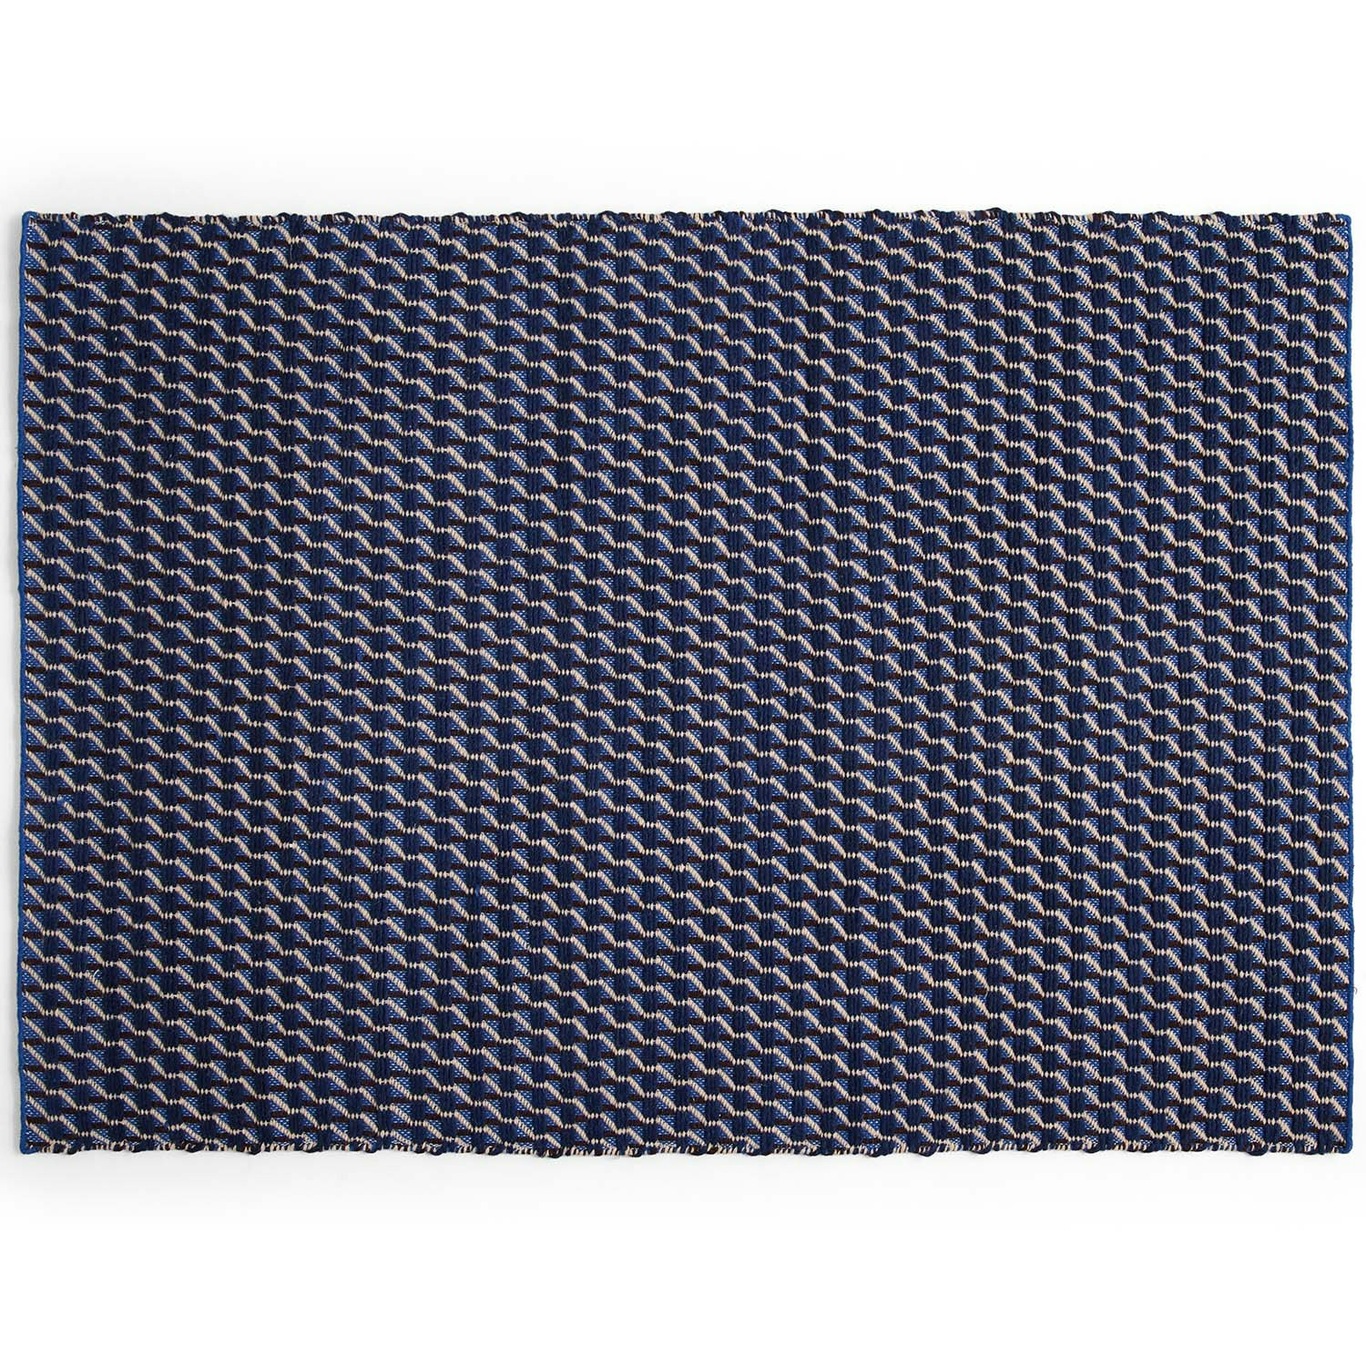 Channel Rug Blue/White, 140x200 cm